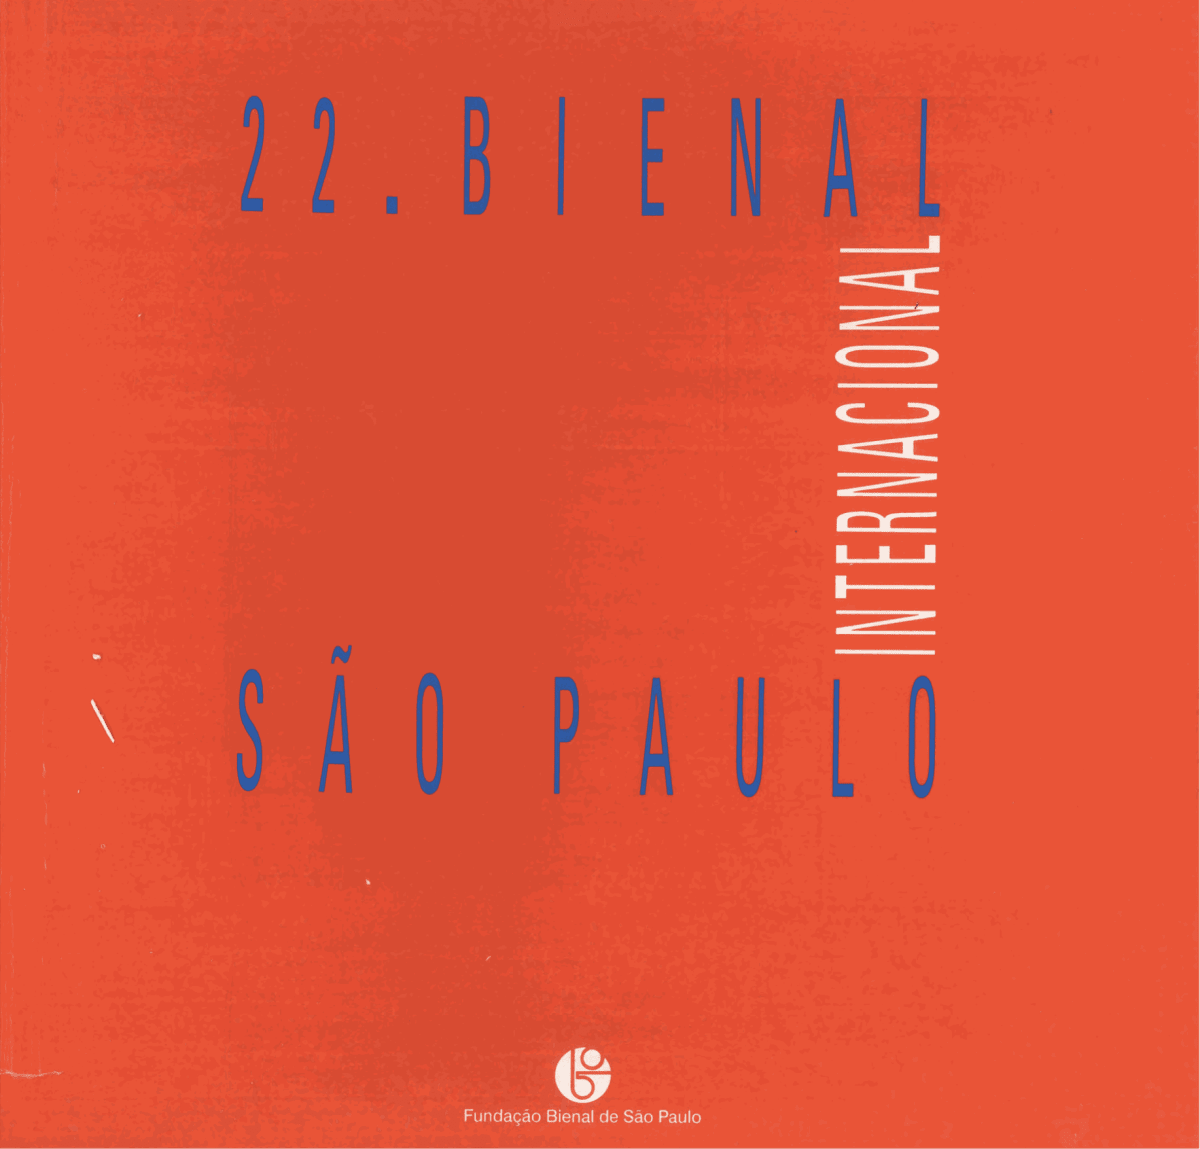 22nd International Biennial of São Paulo